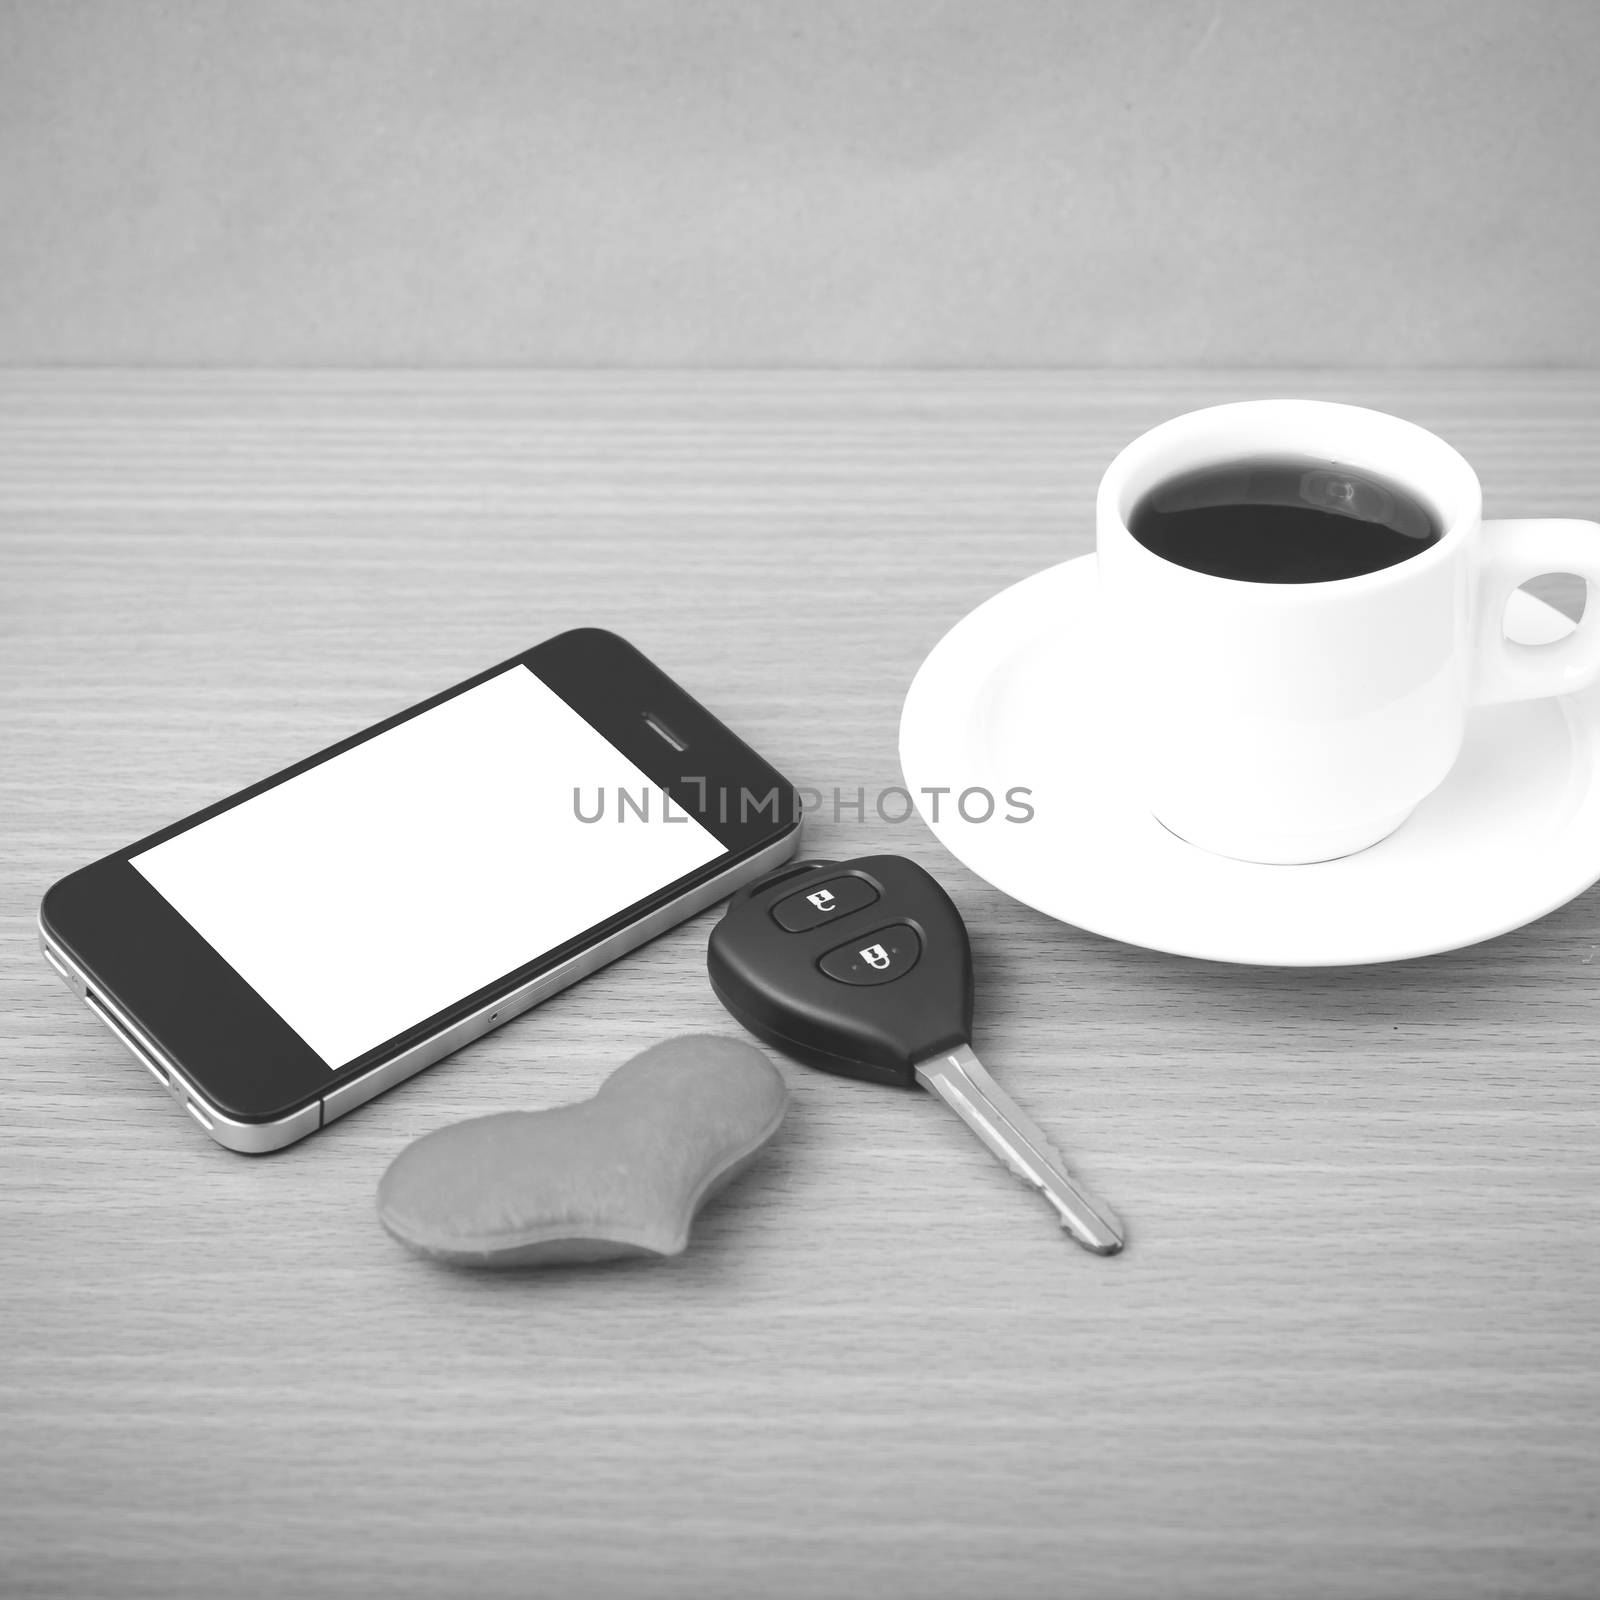 coffee phone car key and heart by ammza12